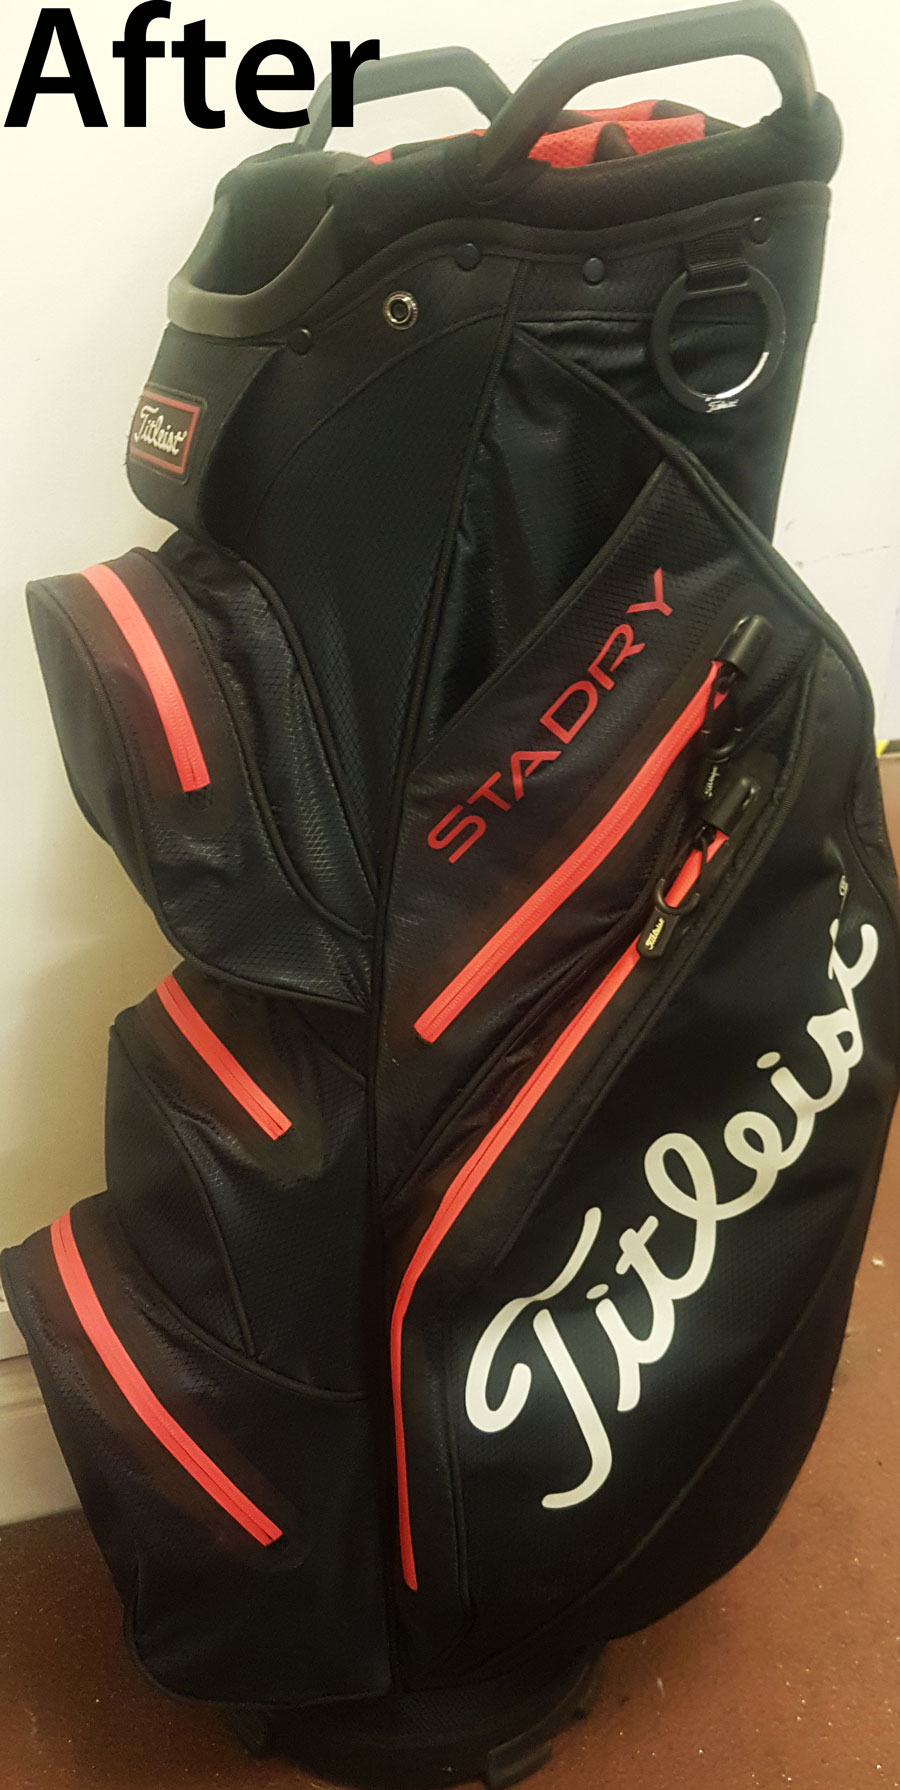 TITLEIST golf bag, zip repair - Zip Experts